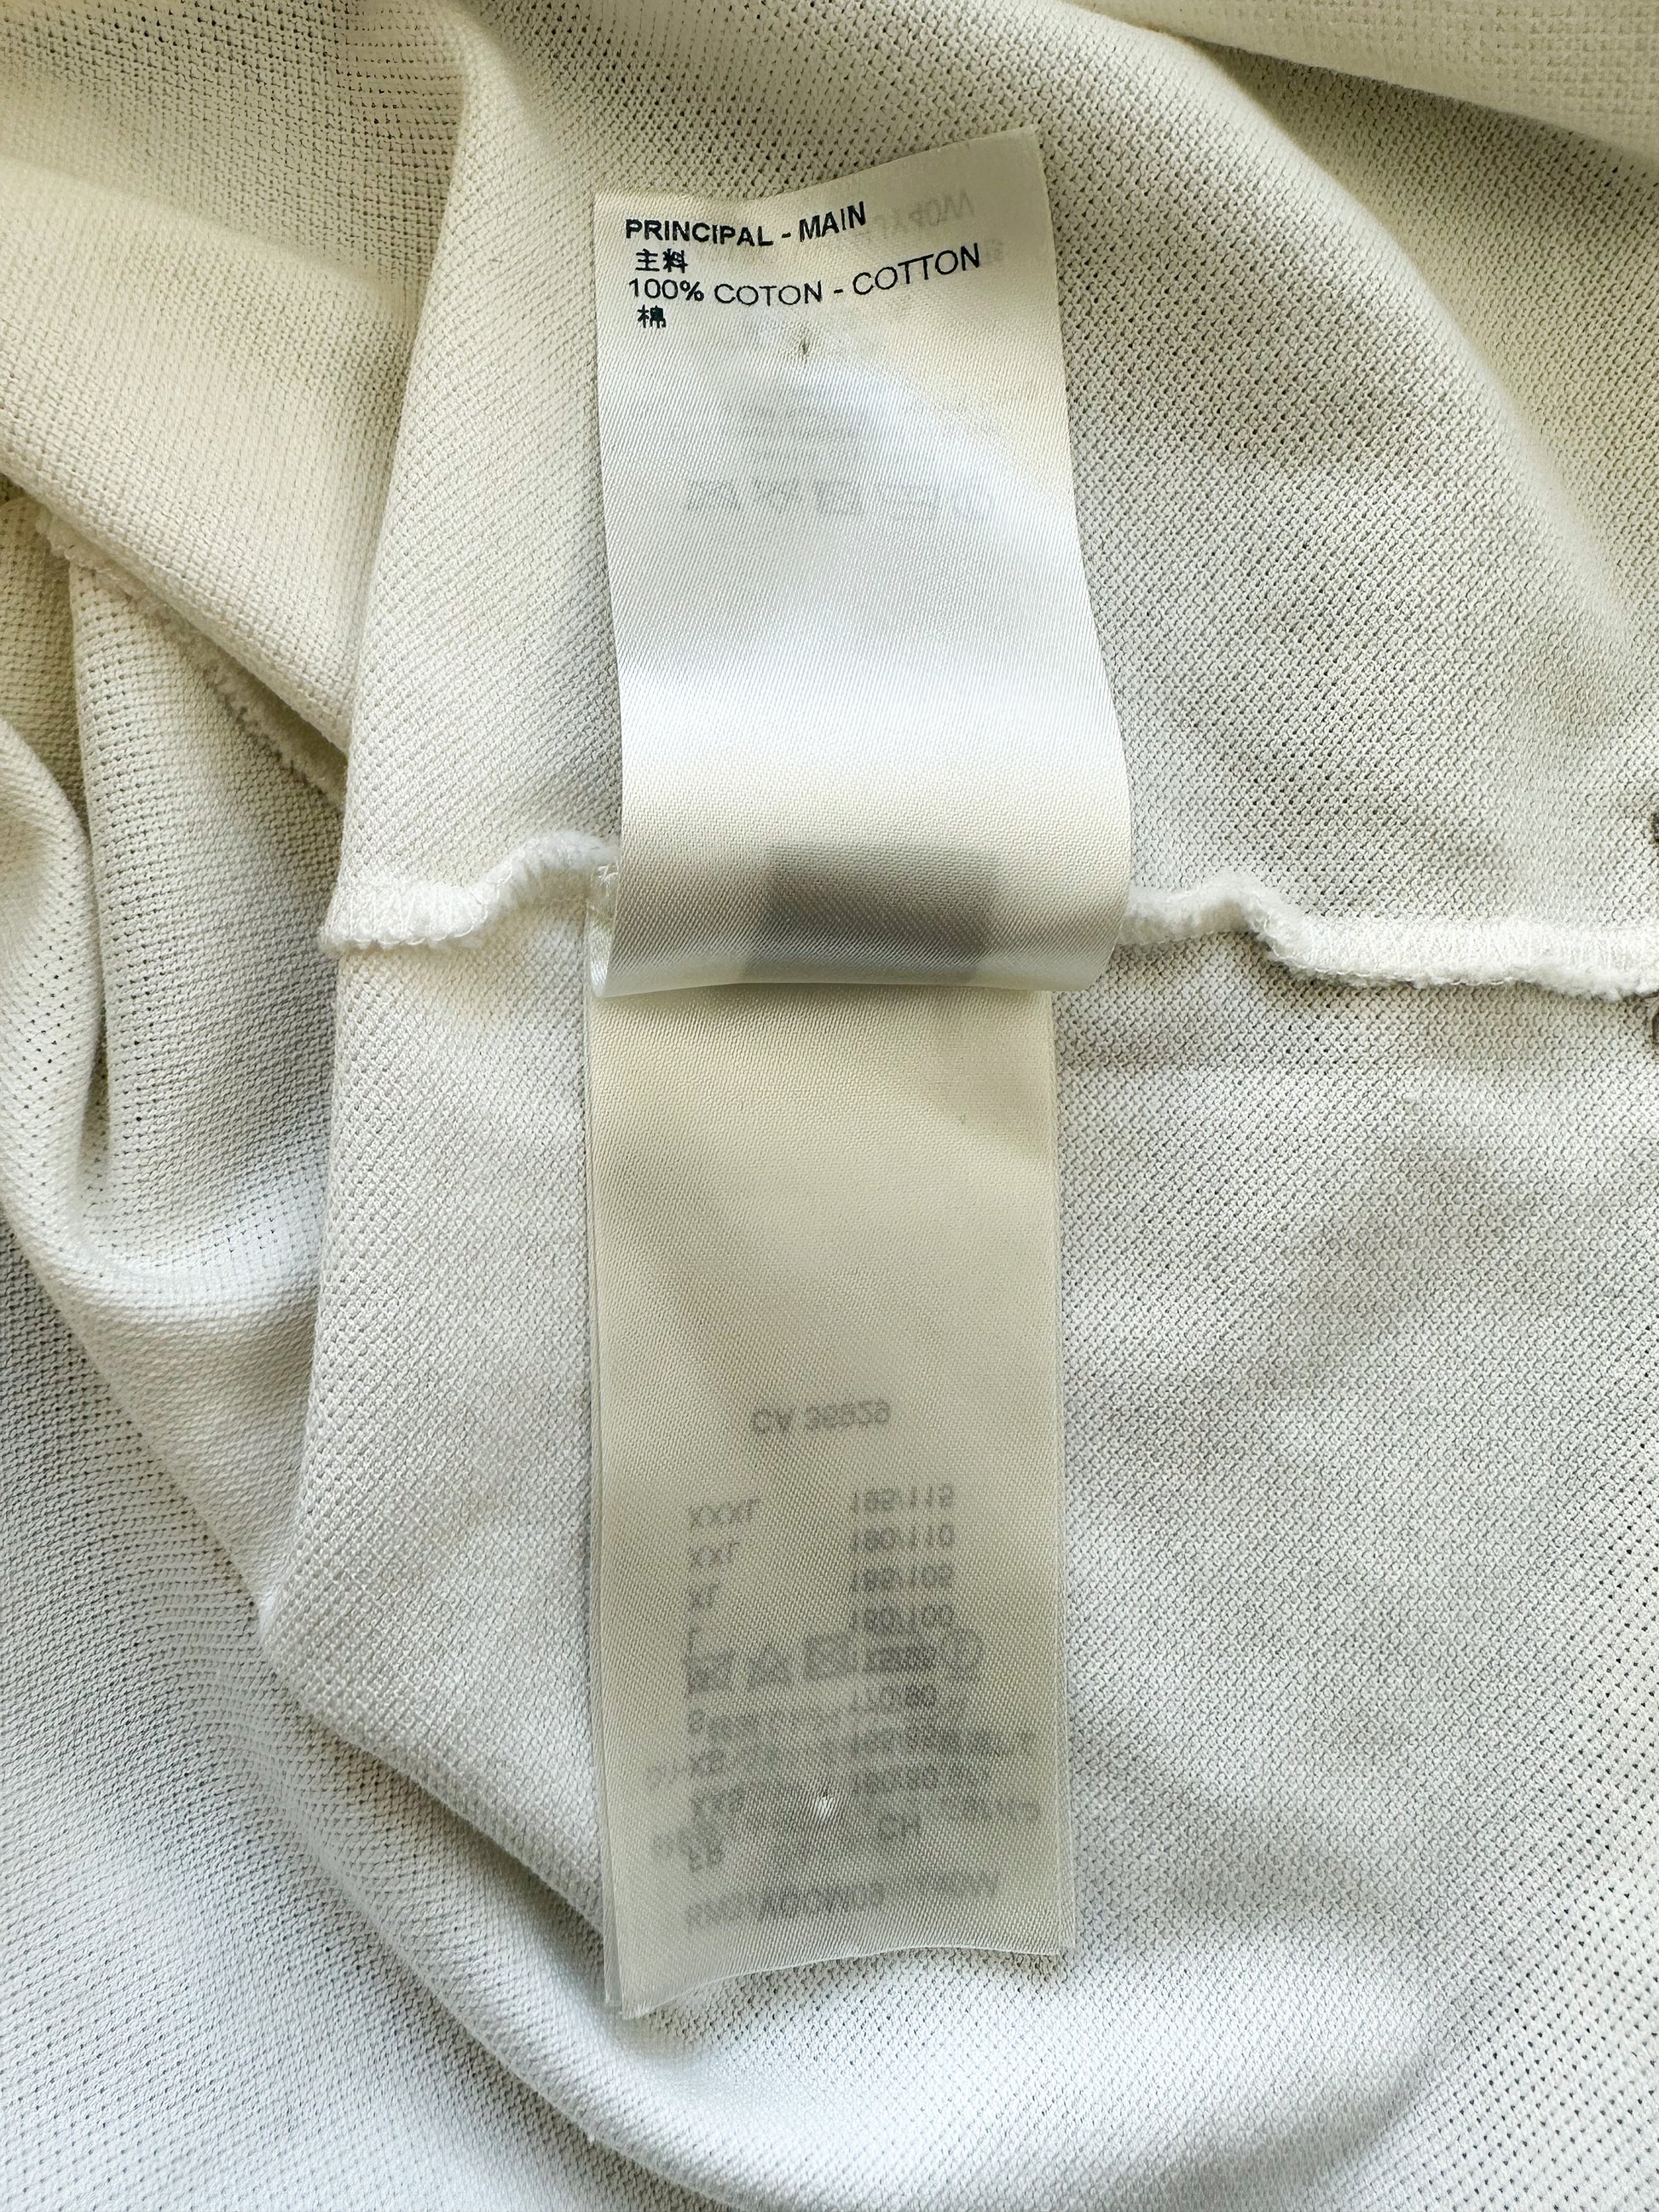 Louis Vuitton Half Damier Pocket T-Shirt Milk White. Size S0